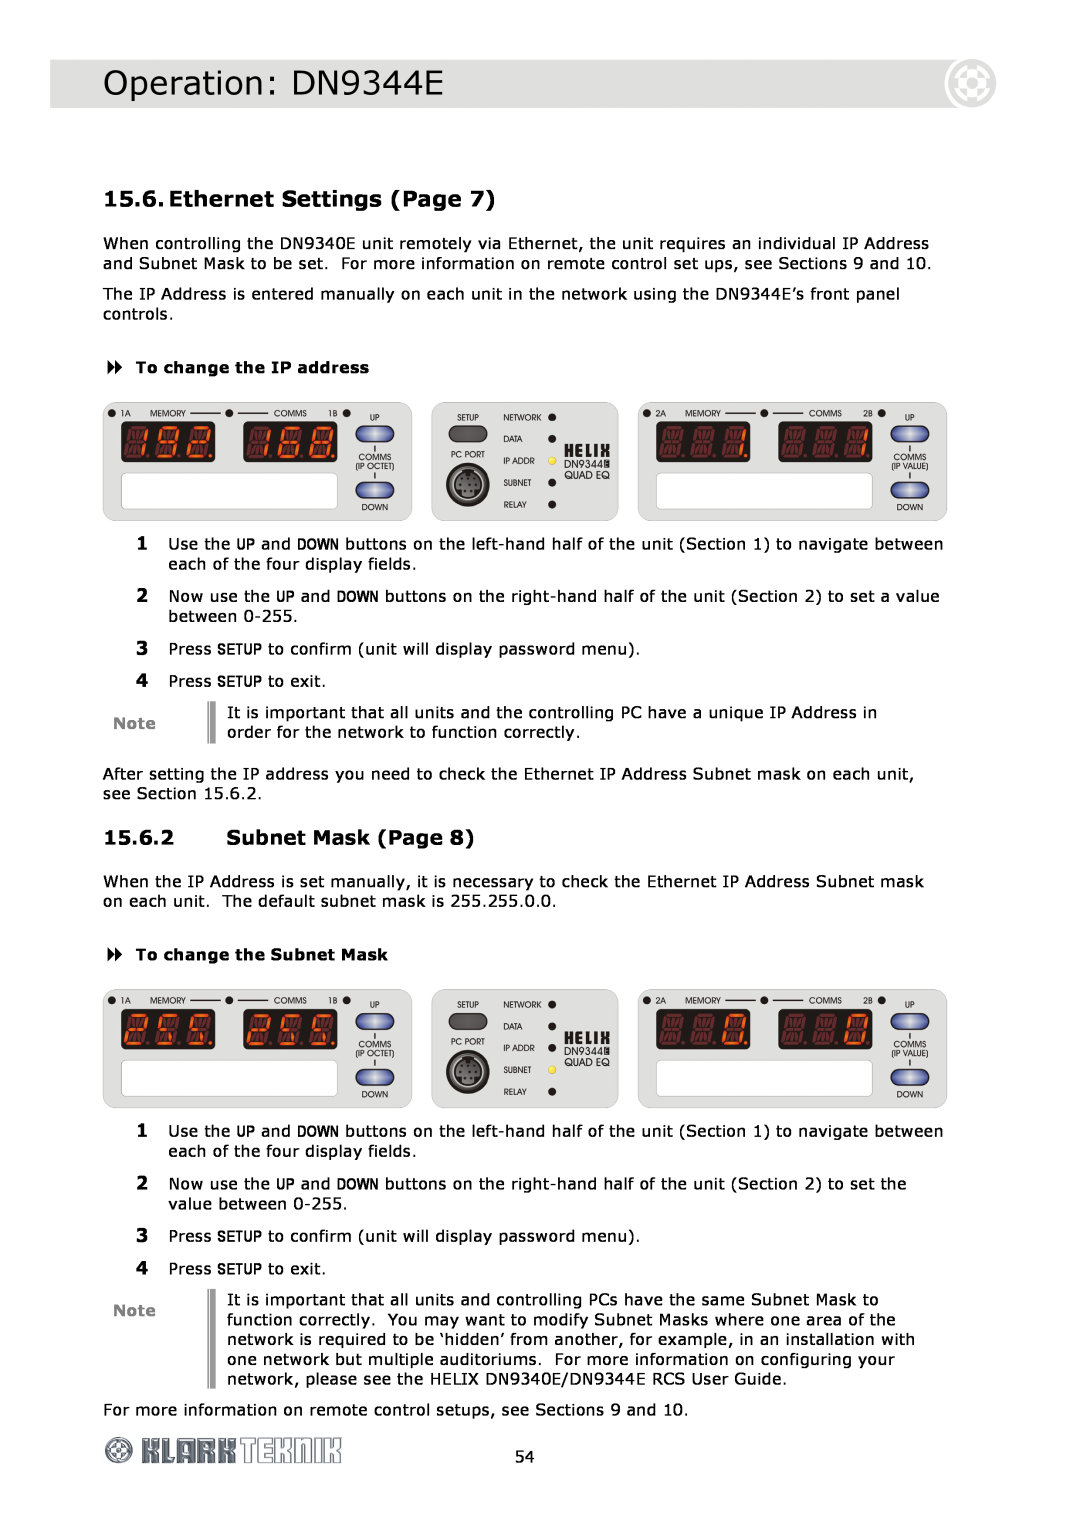 Klark Teknik DN9340E specifications Ethernet Settings Page, Operation DN9344E, 15.6.2Subnet Mask Page 